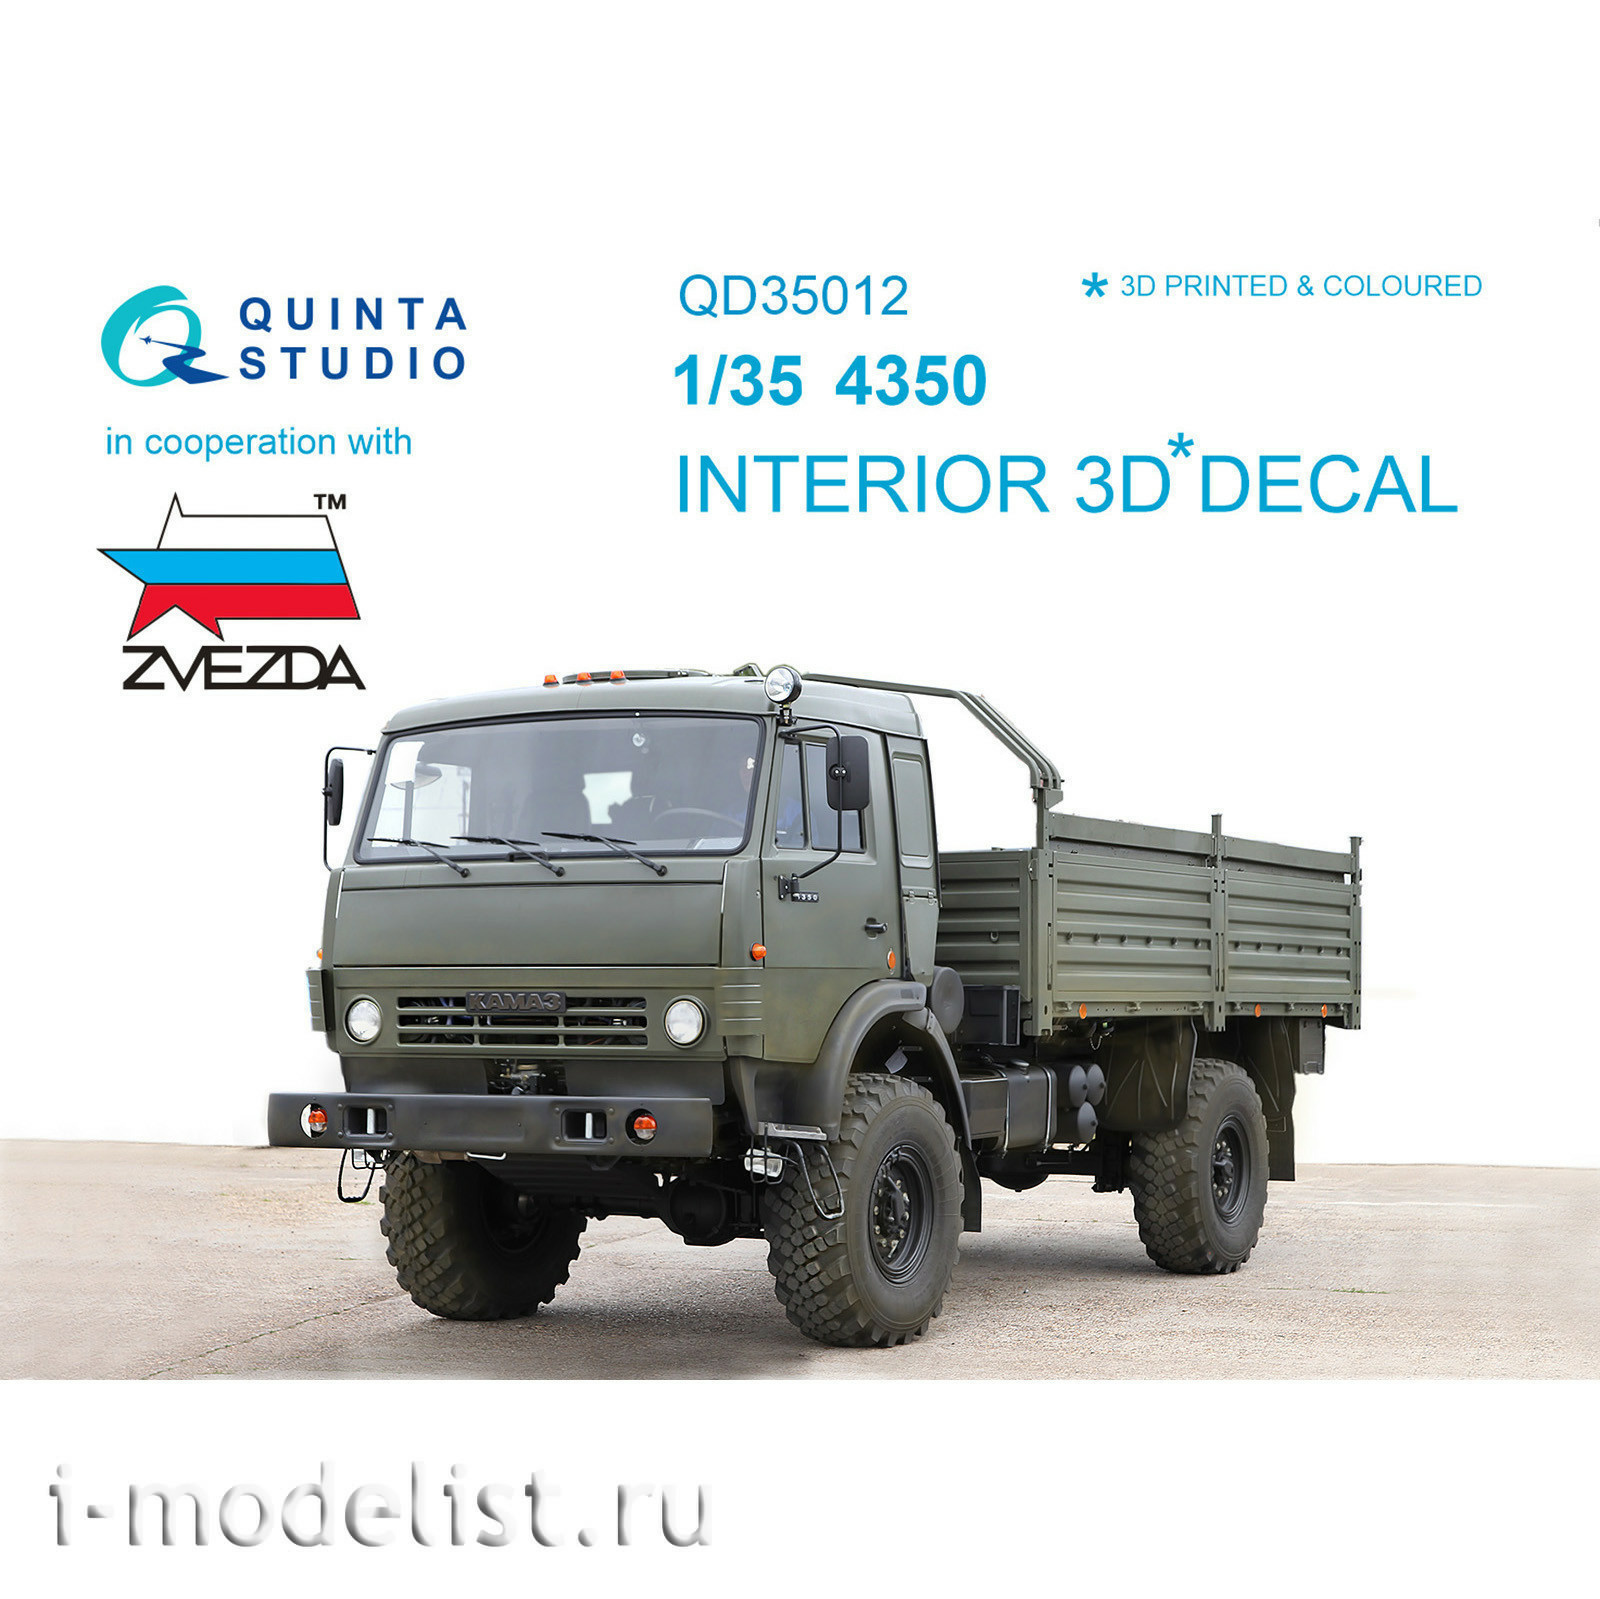 QD35012 Quinta Studio 1/35 3D Cabin Interior Decal for K-3450